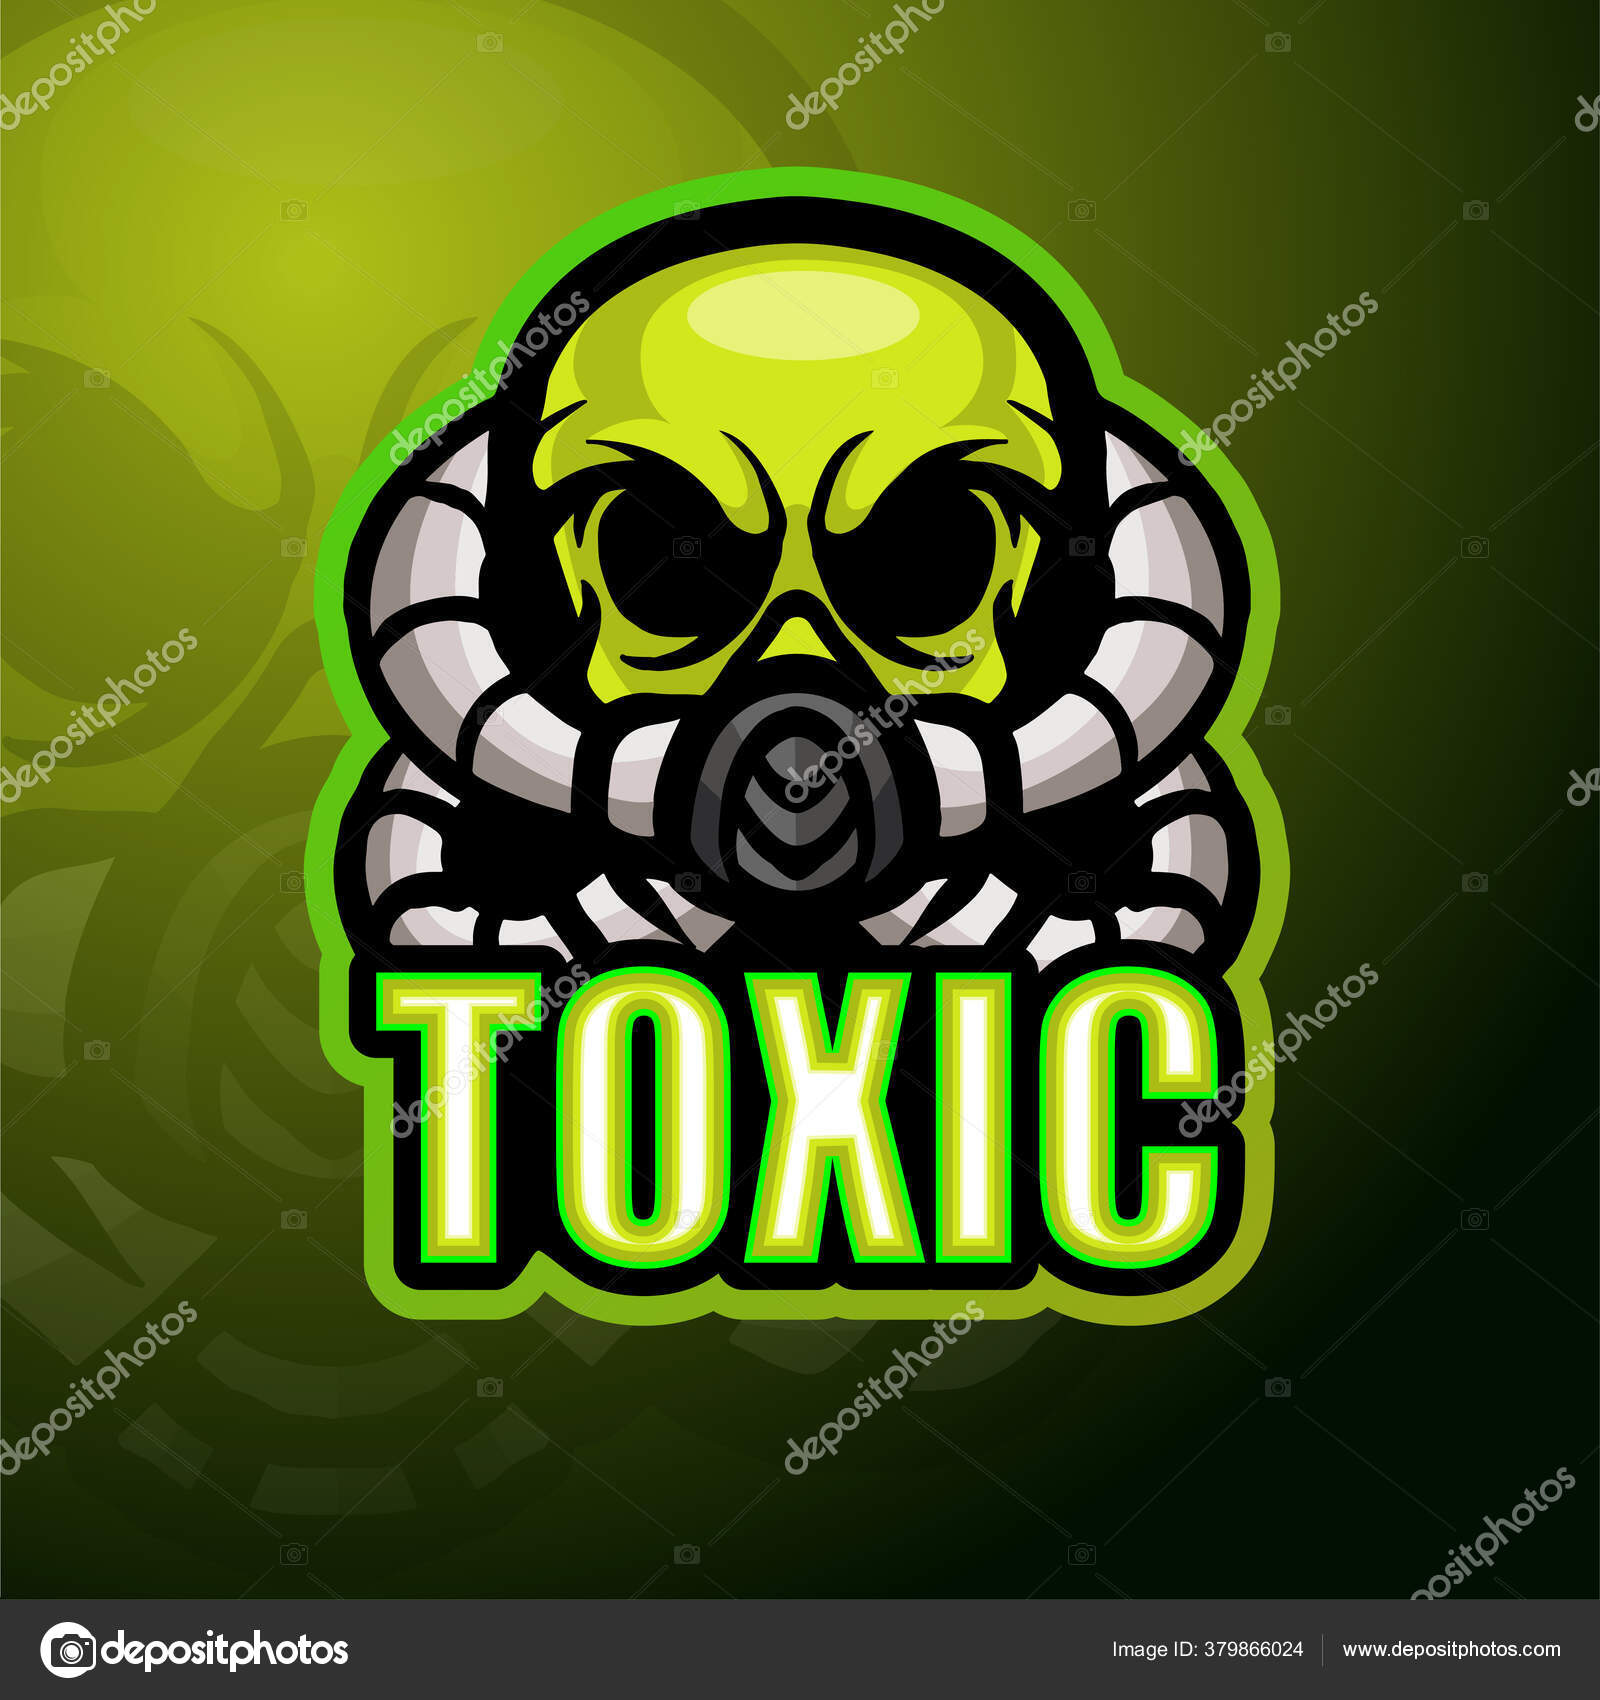 Gas mask logo for toxic team esport Royalty Free Vector